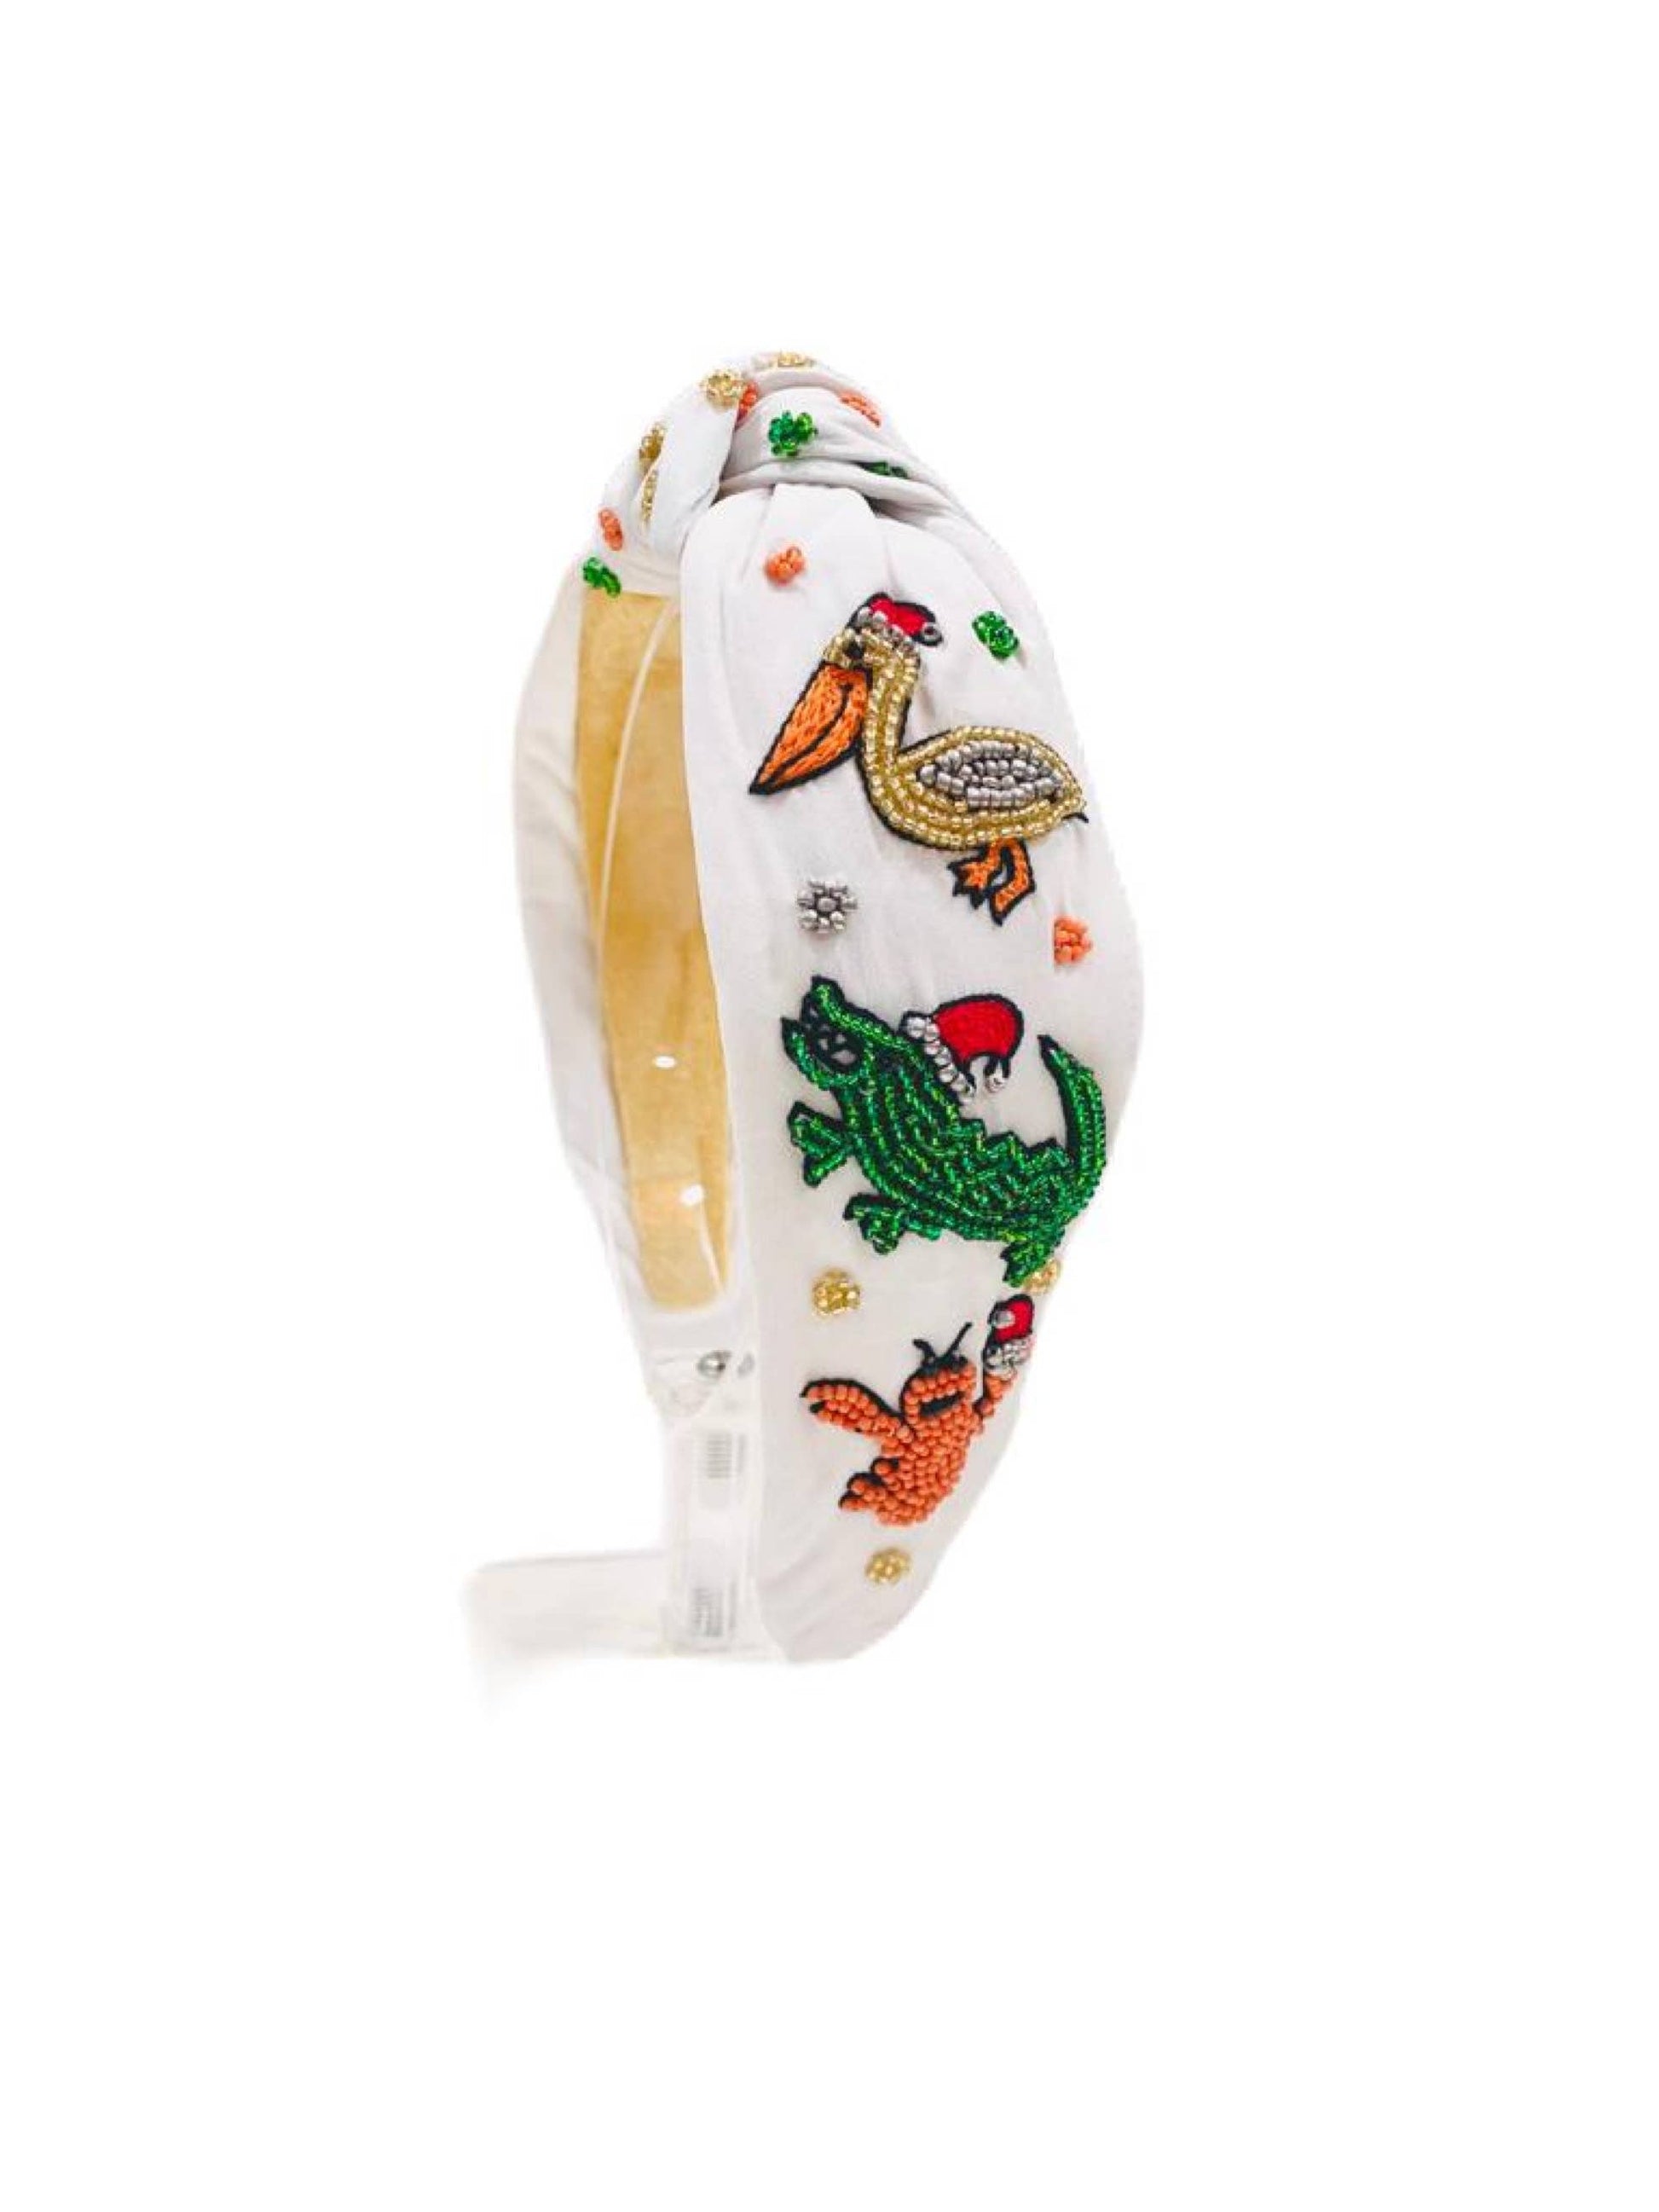 A Cajun Christmas Headband by SeersuckerJOEY LLC with embroidered animals on it.